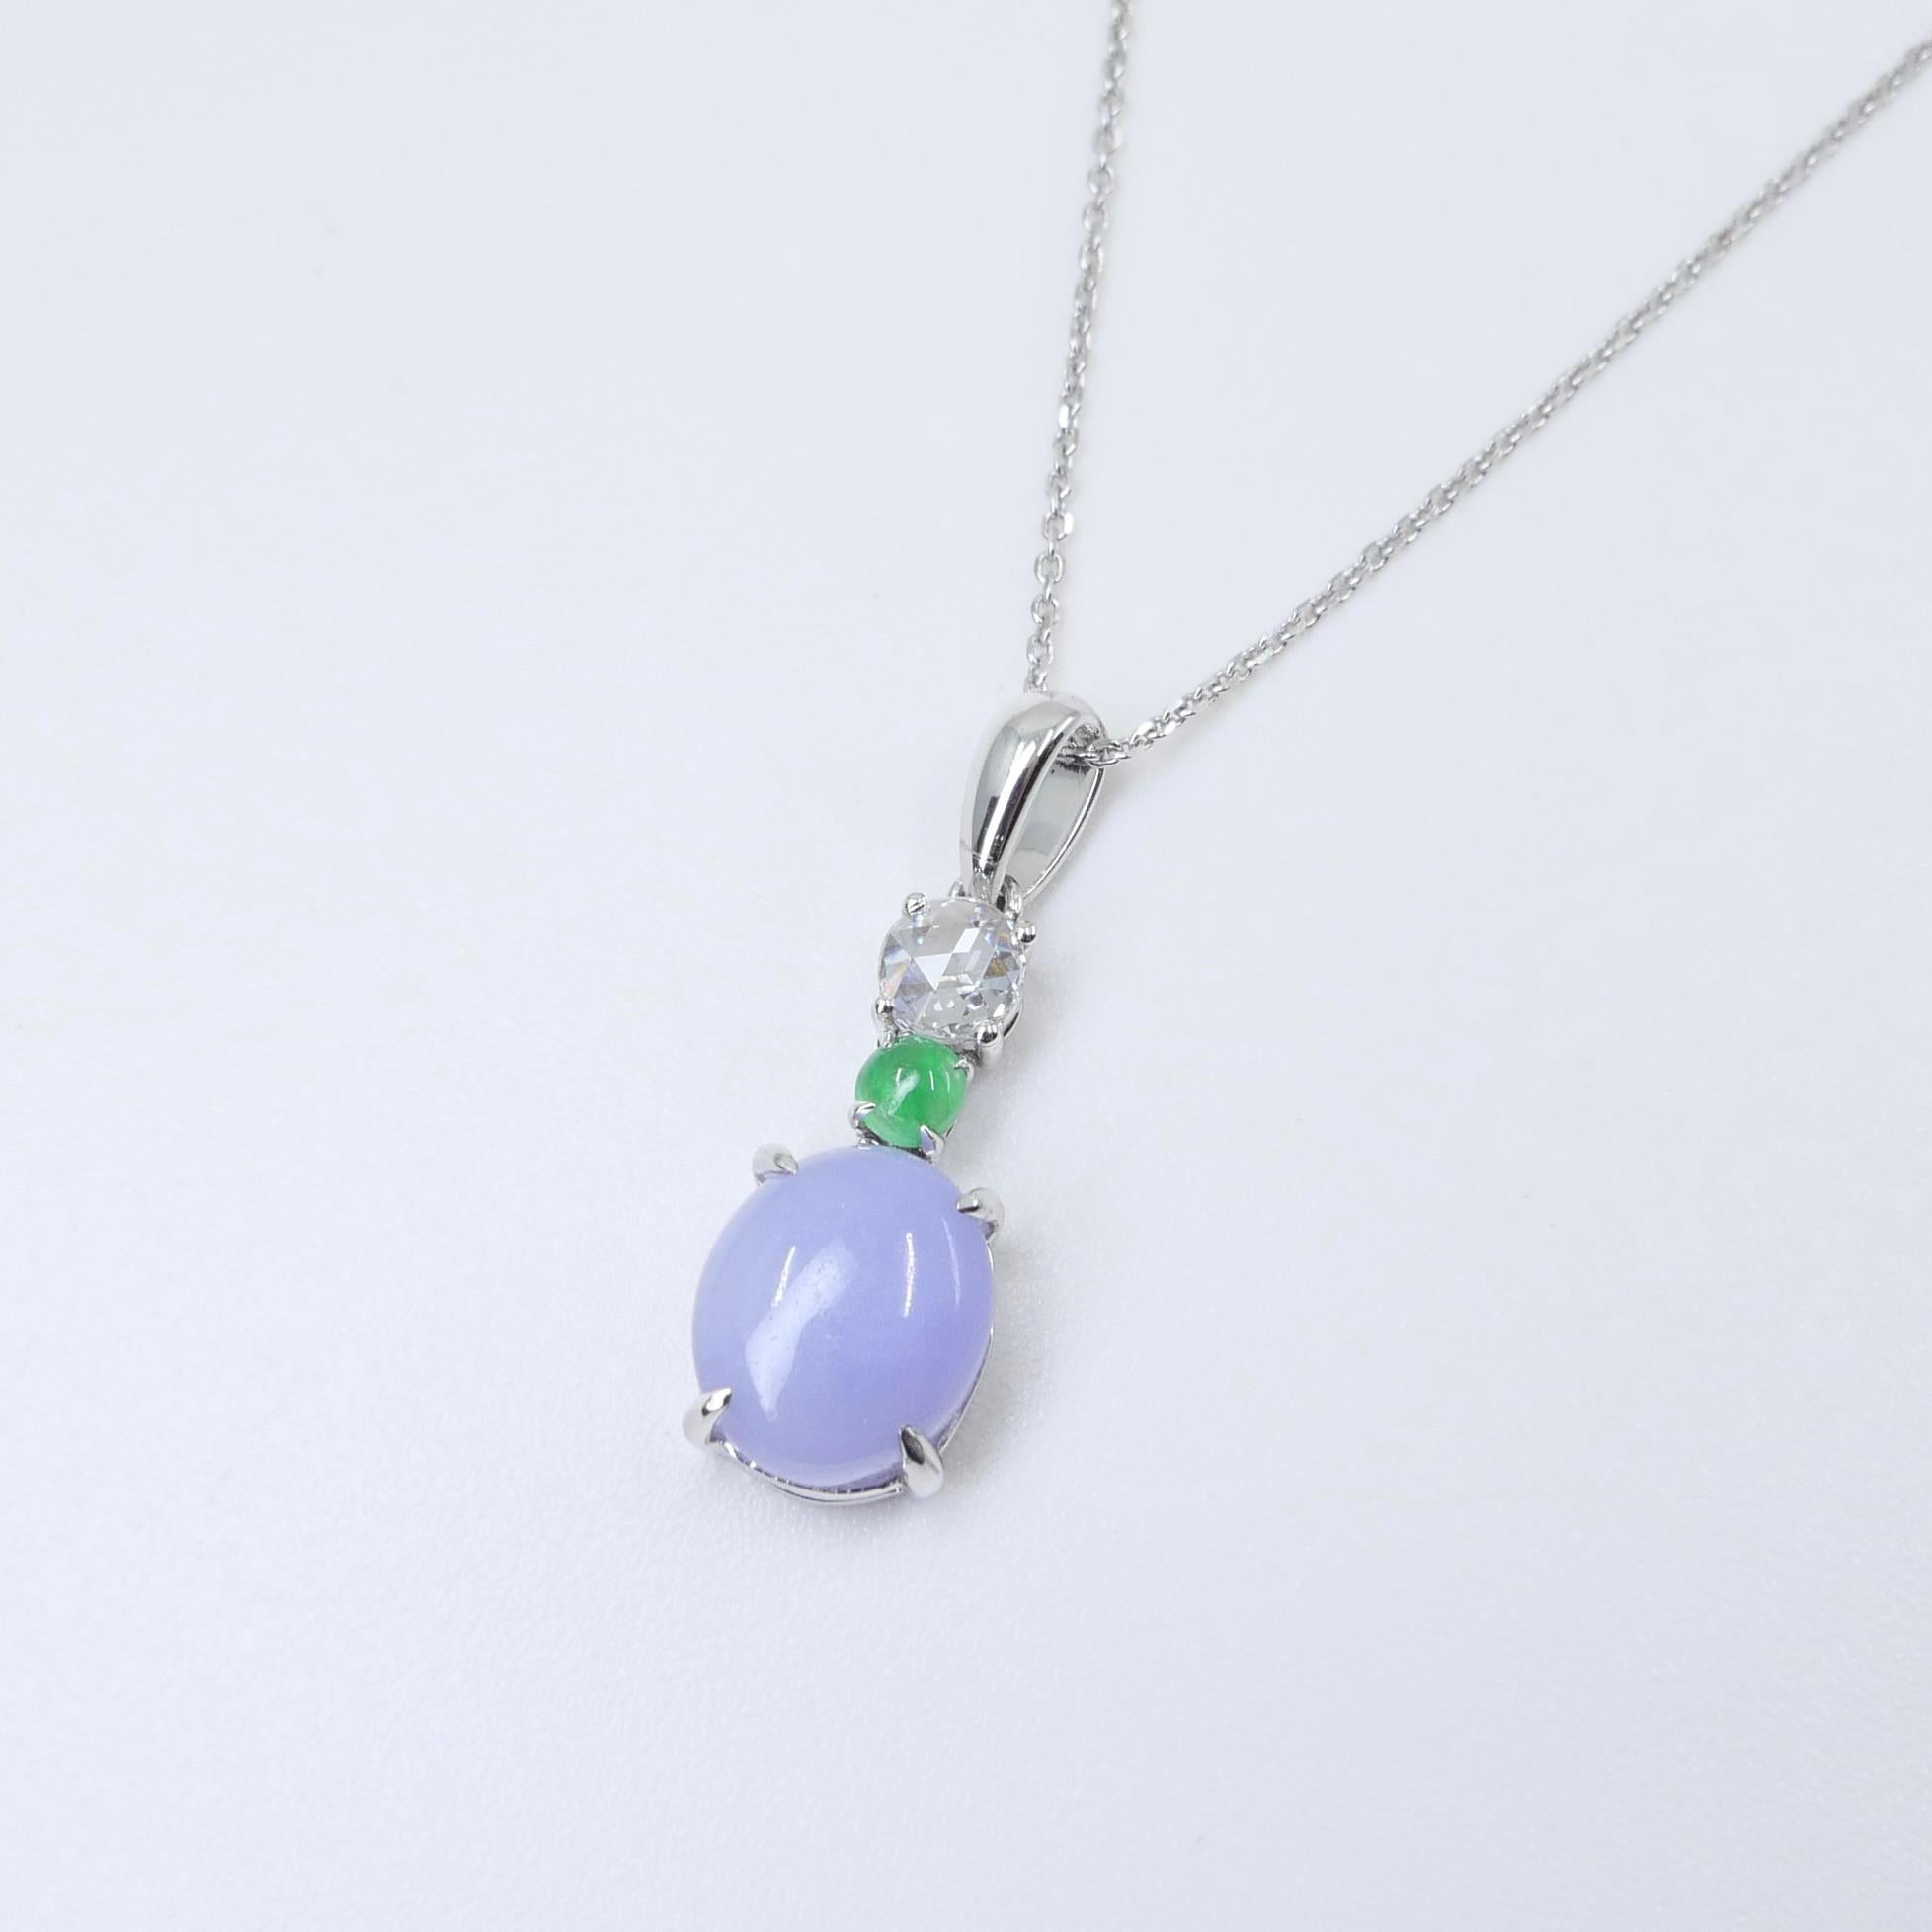 Certified 2.53cts Intense Lavender Jade & Rose Cut Diamond Drop Pendant Necklace For Sale 8